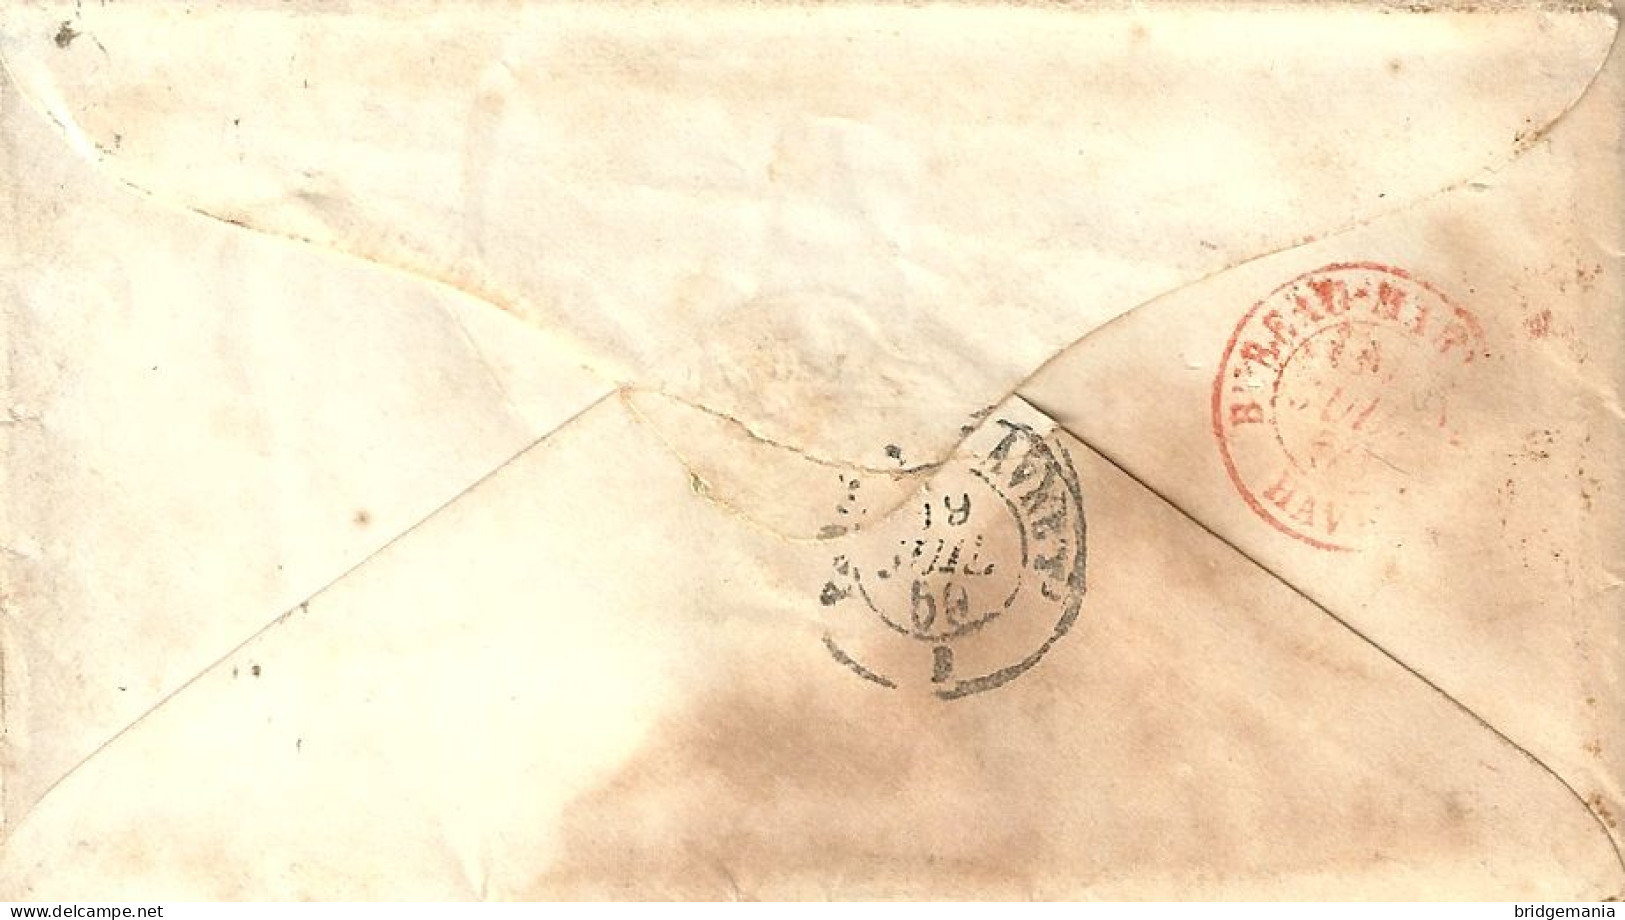 MTM153 - 1859 TRANSATLANTIC LETTER FRANCE TO USA Steamer OCEAN QUEEN VANDERBILT LINE - UNPAID 2 RATE - Storia Postale